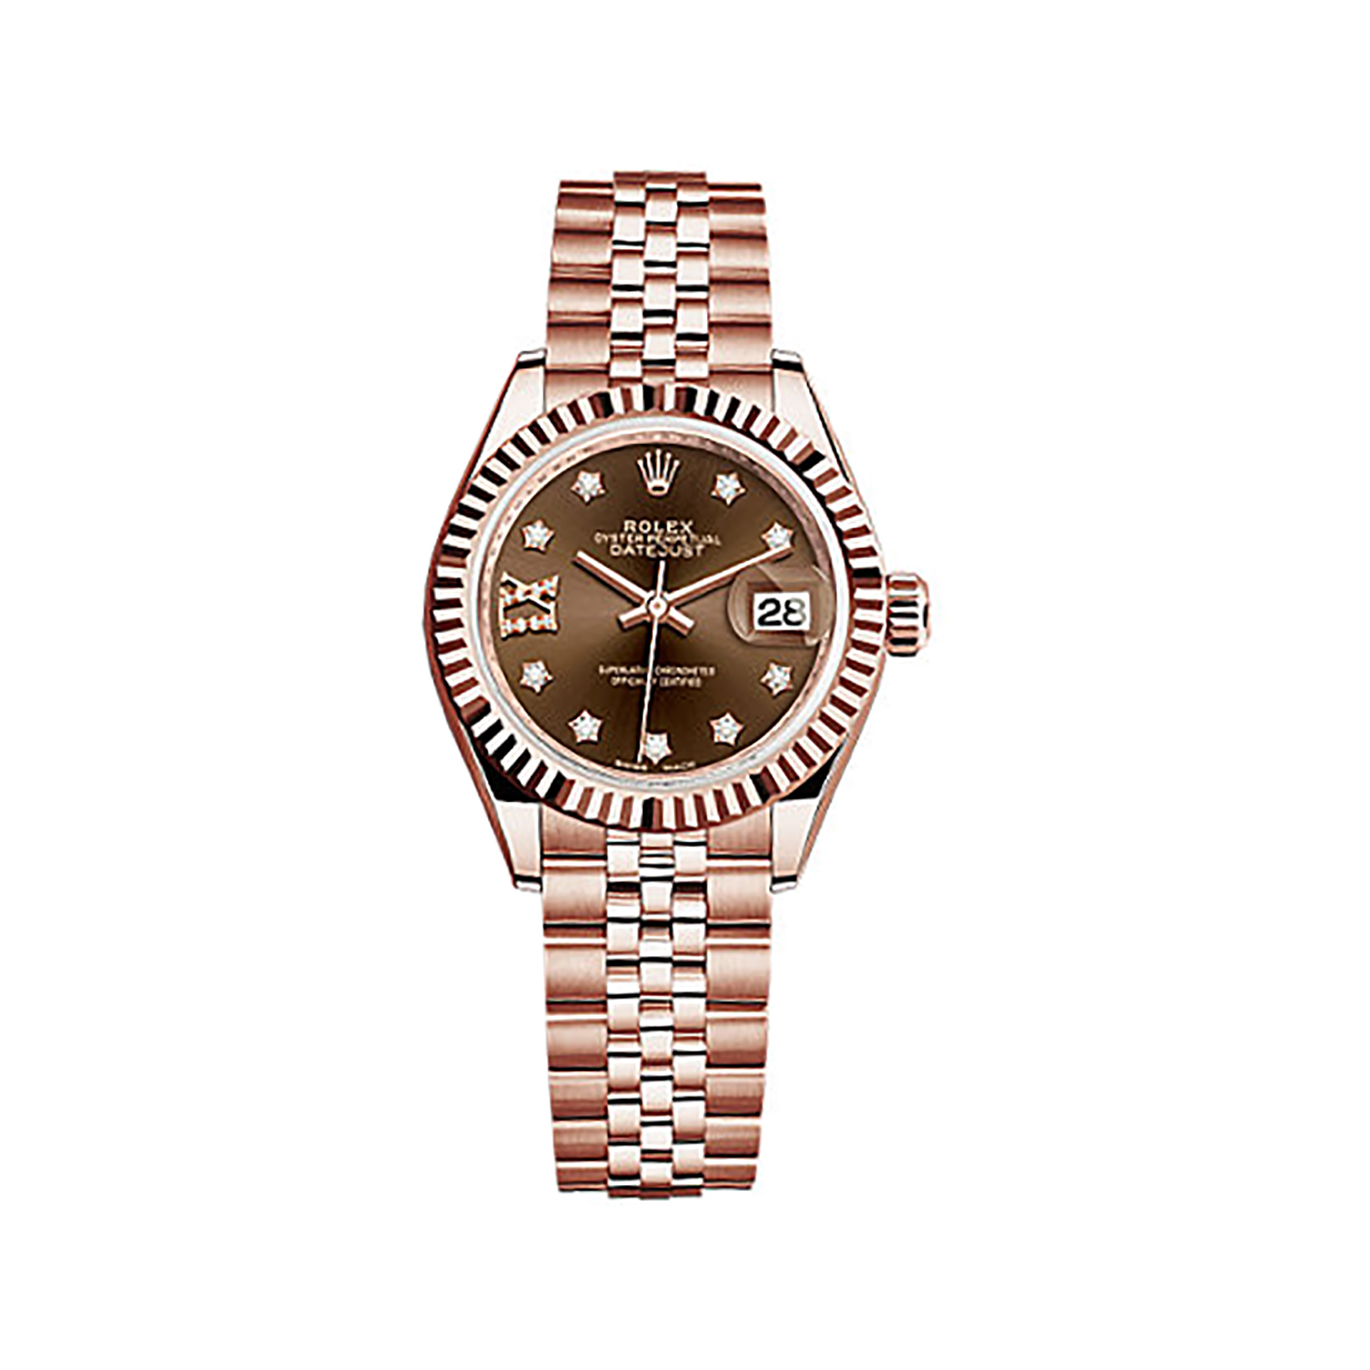 Lady-Datejust 28 279175 Rose Gold Watch (Chocolate Set with Diamonds)